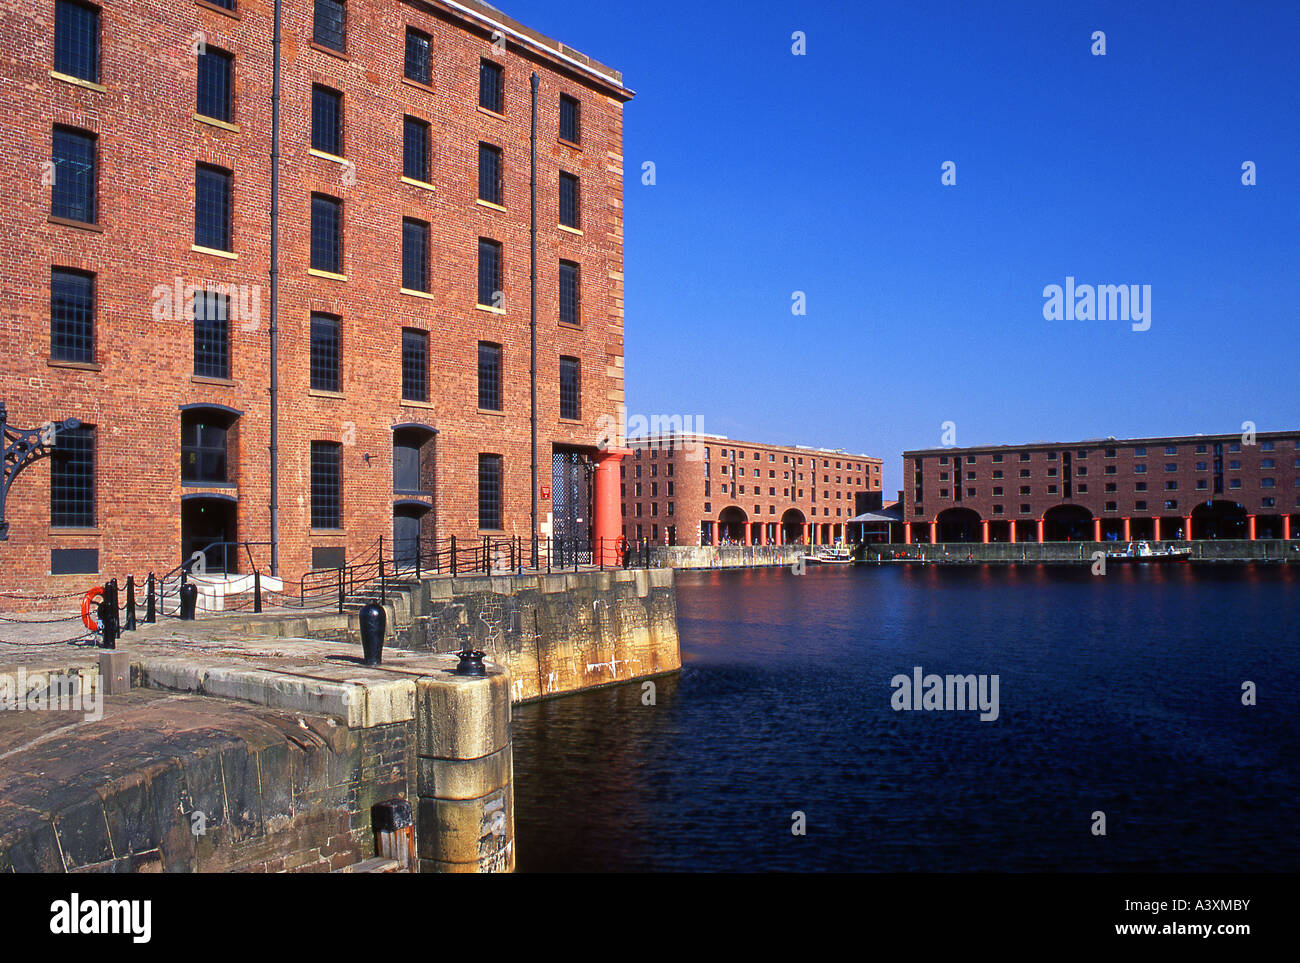 L'Albert Dock, Liverpool, Merseyside, England, UK Banque D'Images